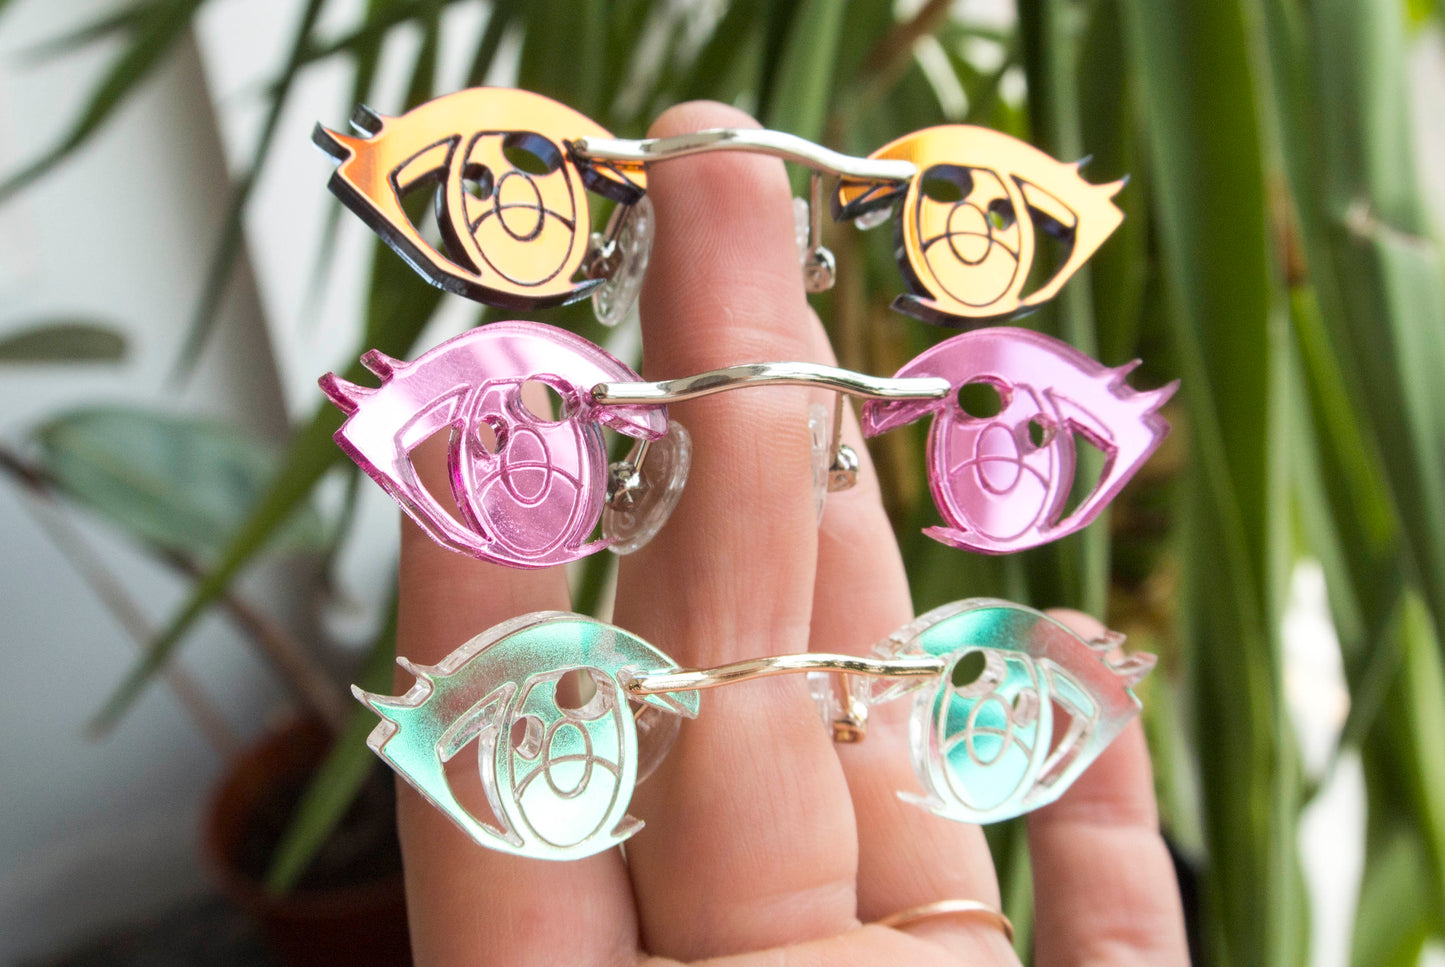 Three pairs of anime inspired pince nez eyewear